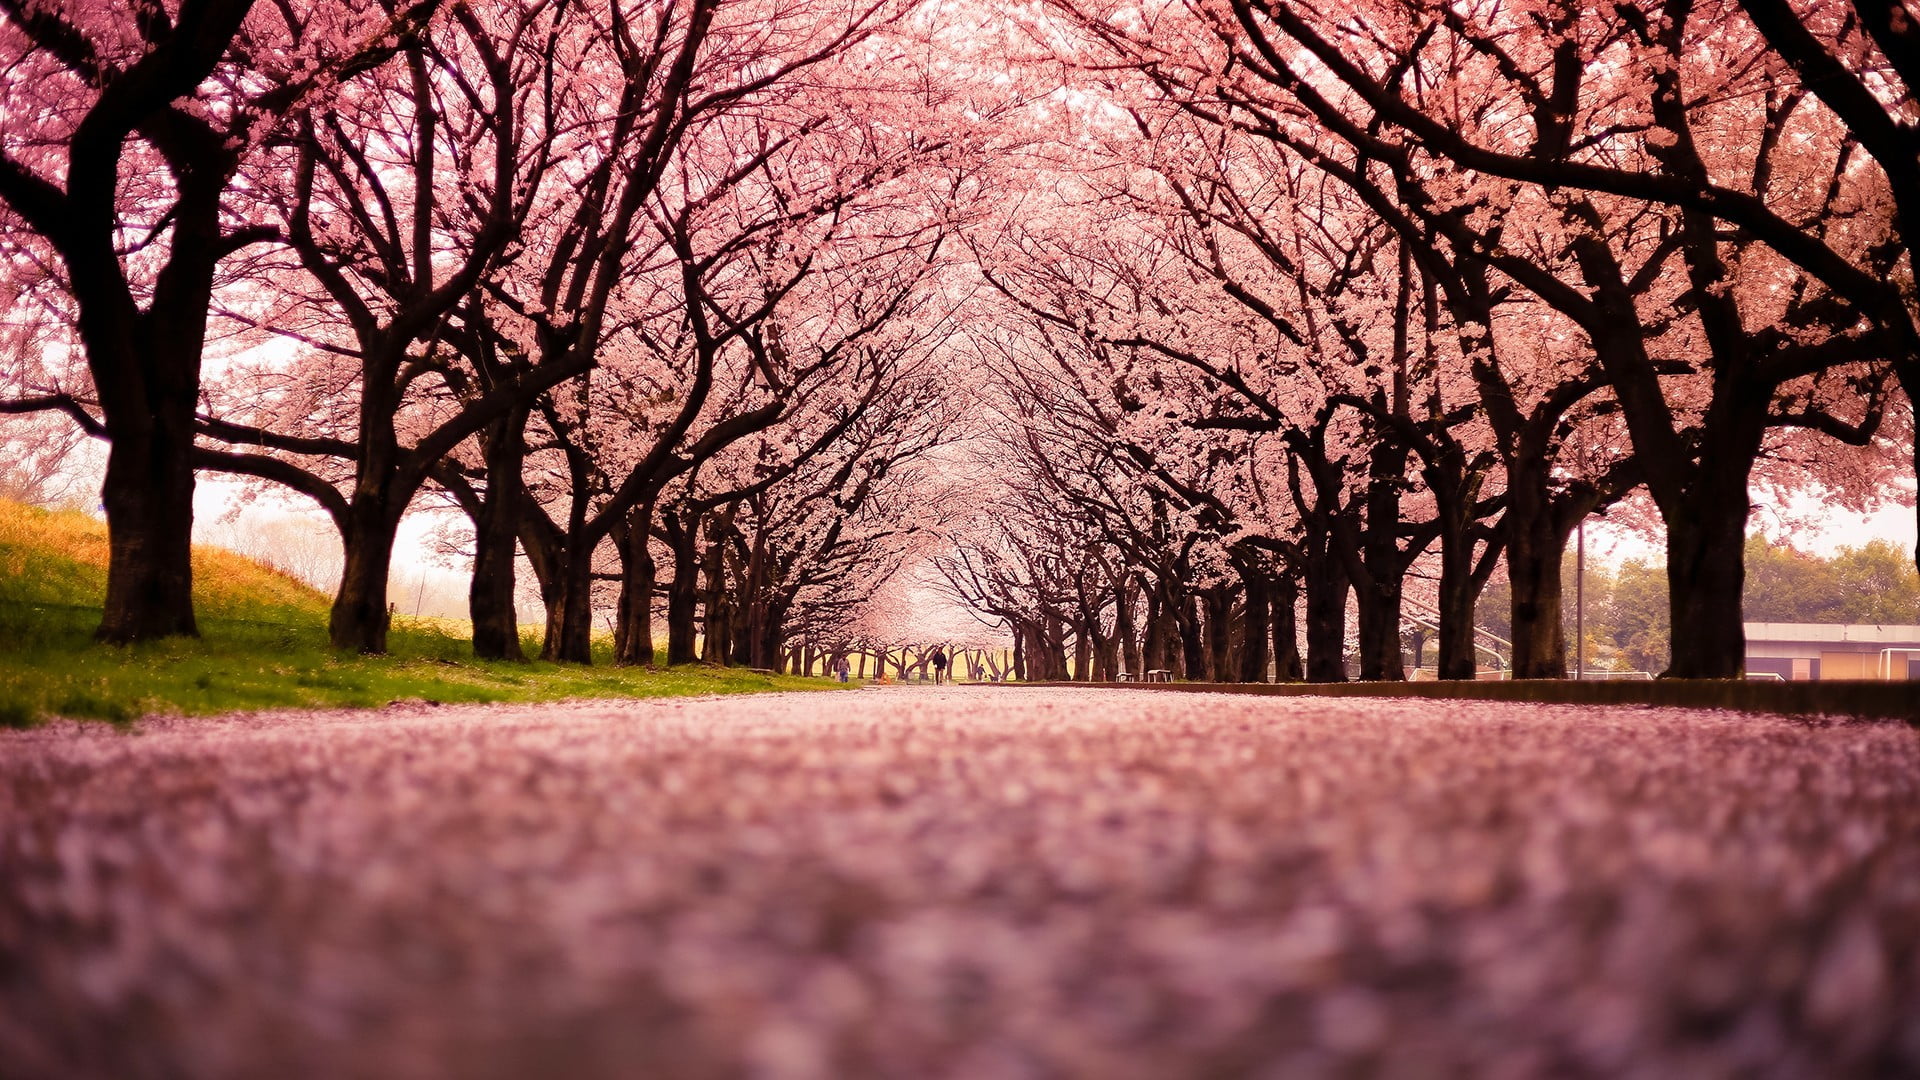 Beautiful Cherry Blossom Trees, the way forward, scenics  nature, branch, autumn